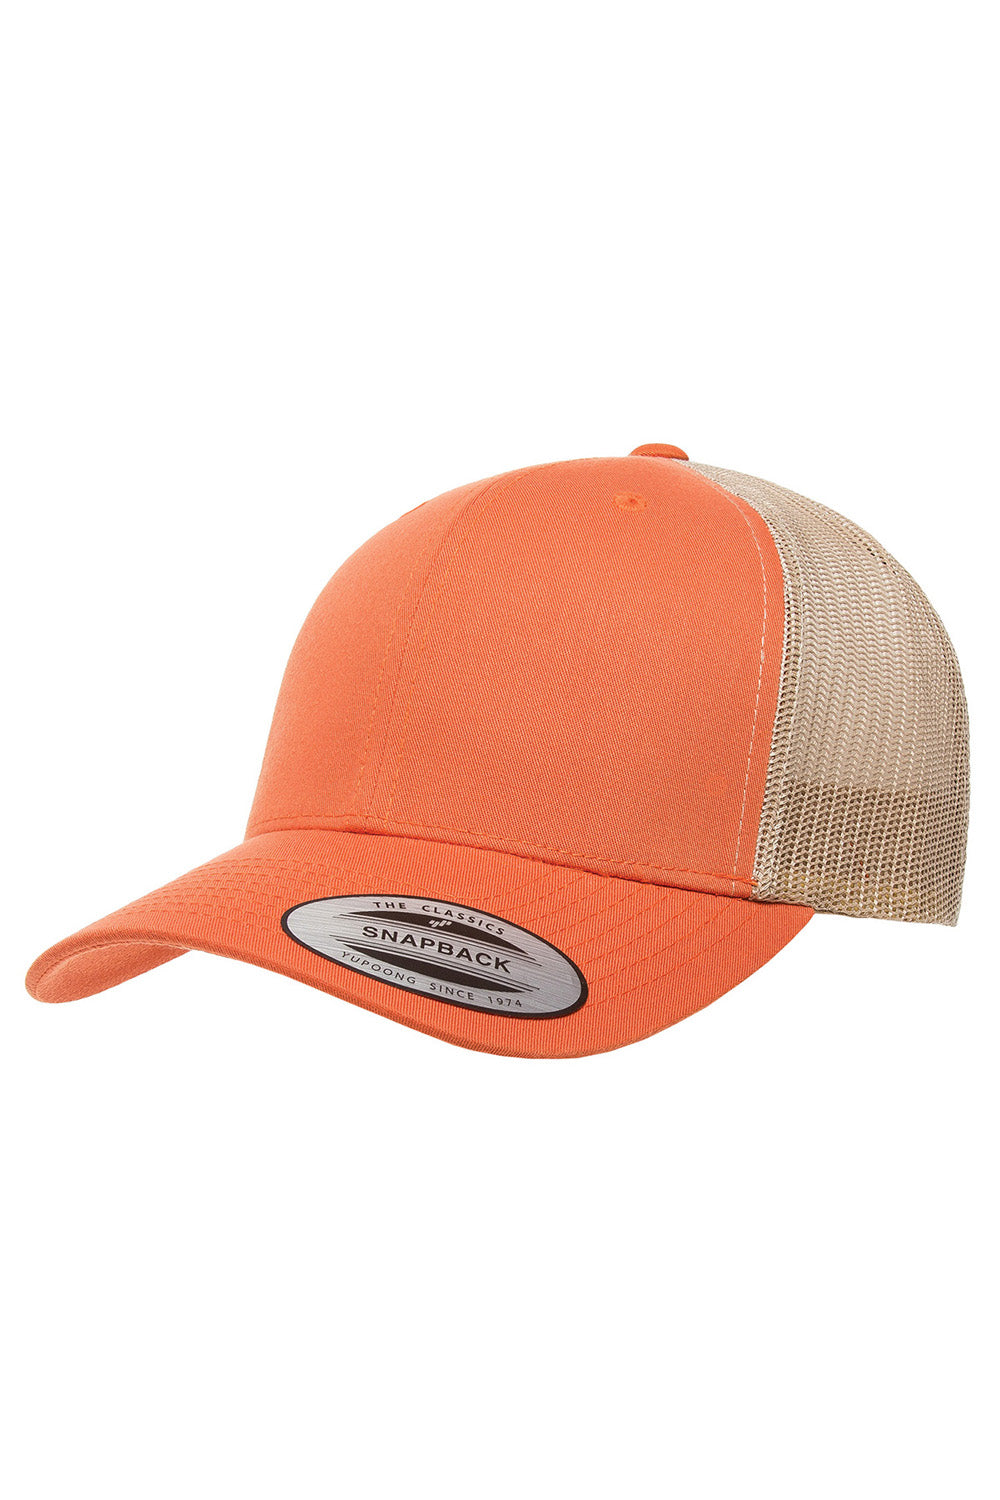 Yupoong 6606 Mens Adjustable Trucker Hat Rust Orange/Khaki Front